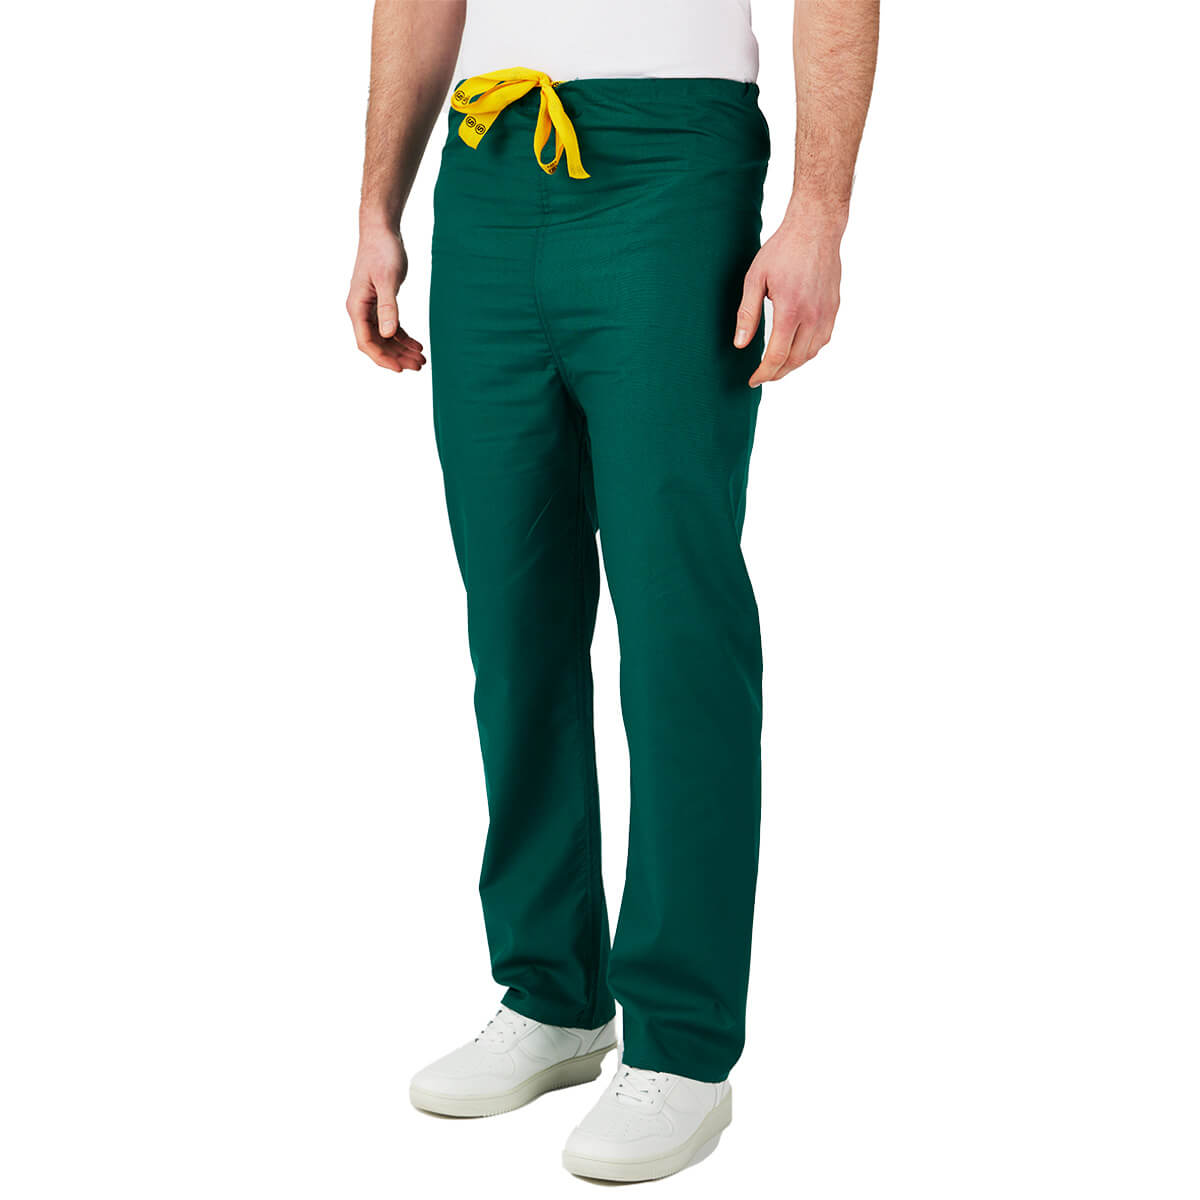 Hunter green scrub pants